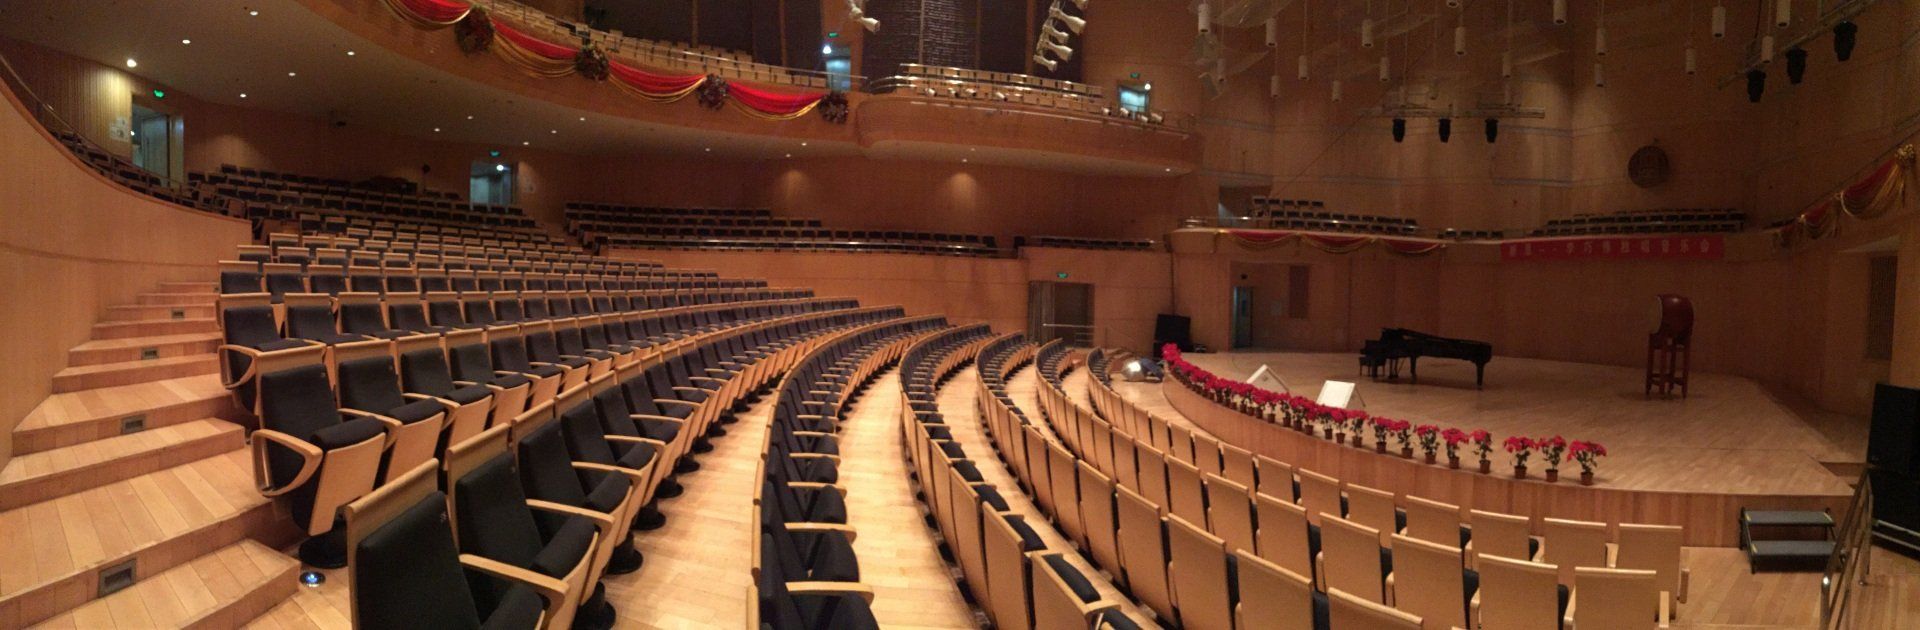 Music auditorium utilizing hardwood throughout the room to improve acoustics.